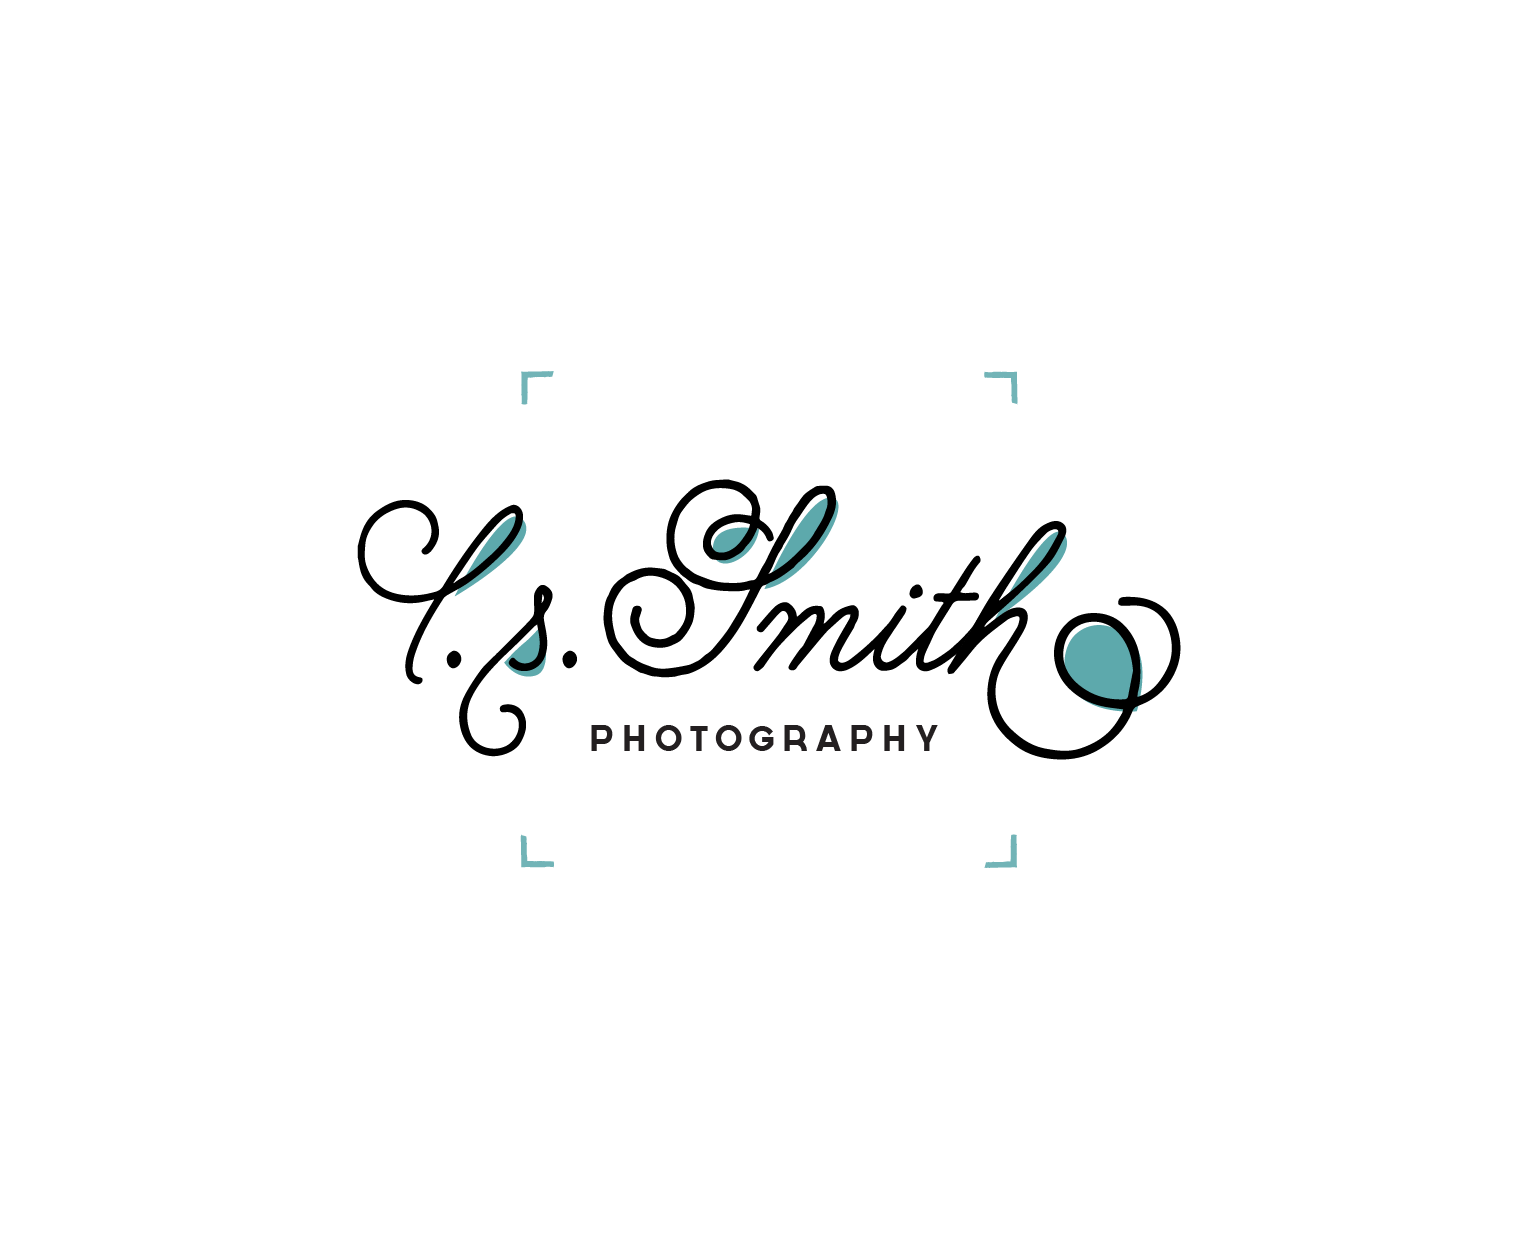 L.S. Smith Photography - Brand Development & Logo Design